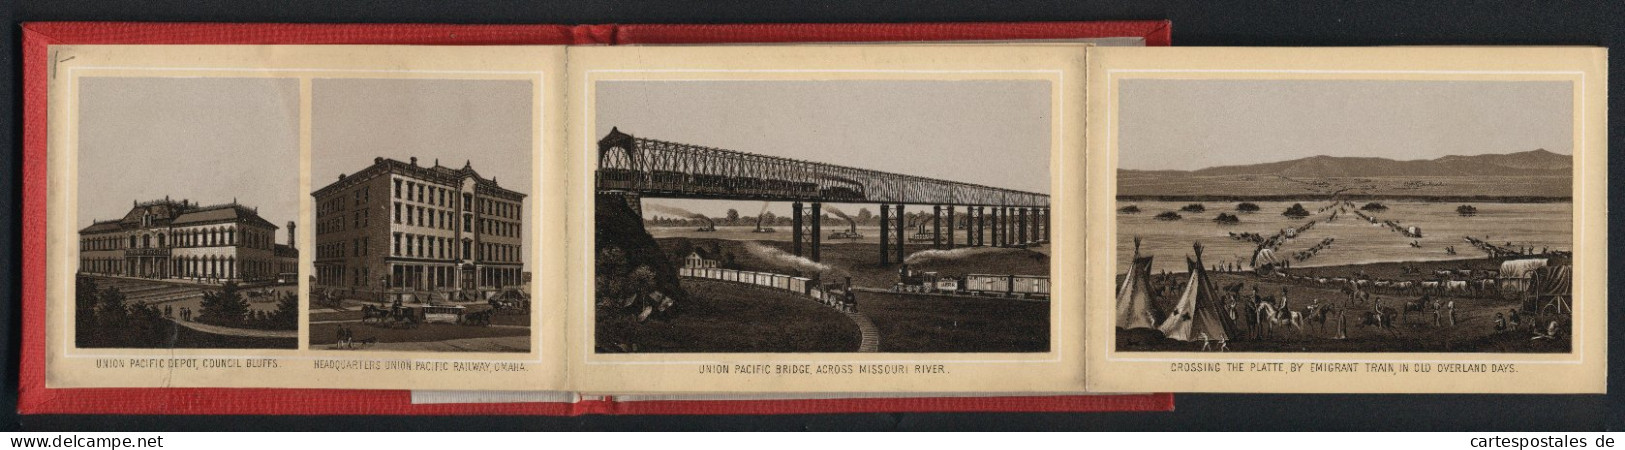 Leporello-Album Union Pacific Railwaymit 24 Lithographie-Ansichten, Headquarter Omaha, Weber Canon, Devils Gate, Ogden  - Lithographien